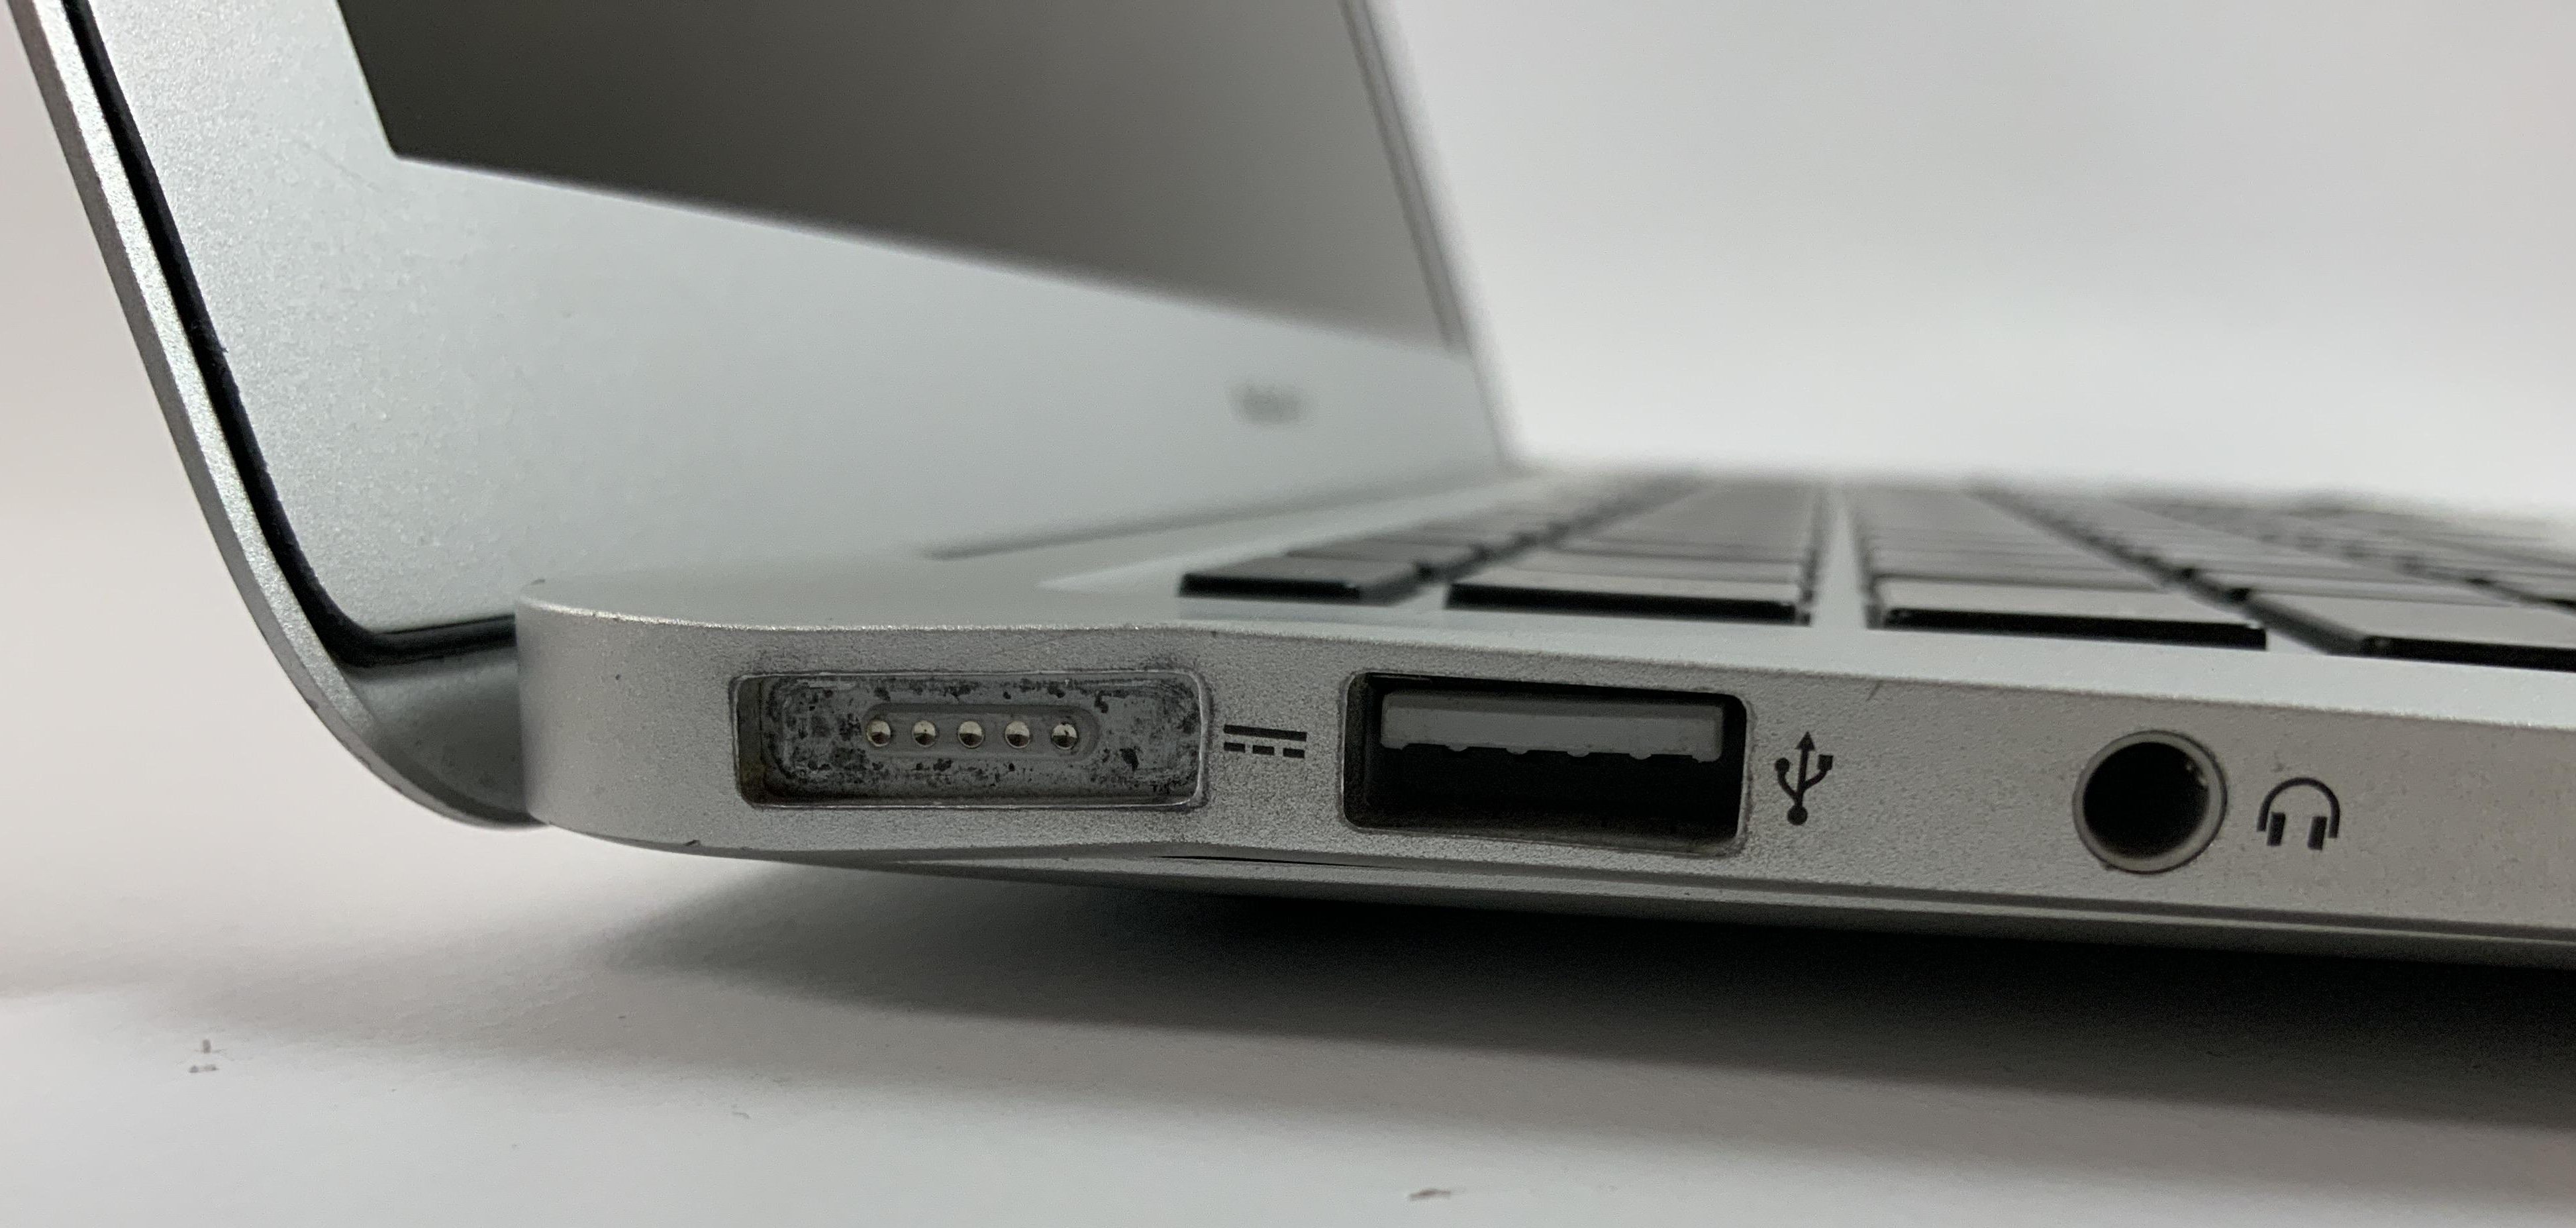 MacBook Air 13" Early 2015 (Intel Core i5 1.6 GHz 4 GB RAM 128 GB SSD), Intel Core i5 1.6 GHz, 4 GB RAM, 128 GB SSD, bild 2